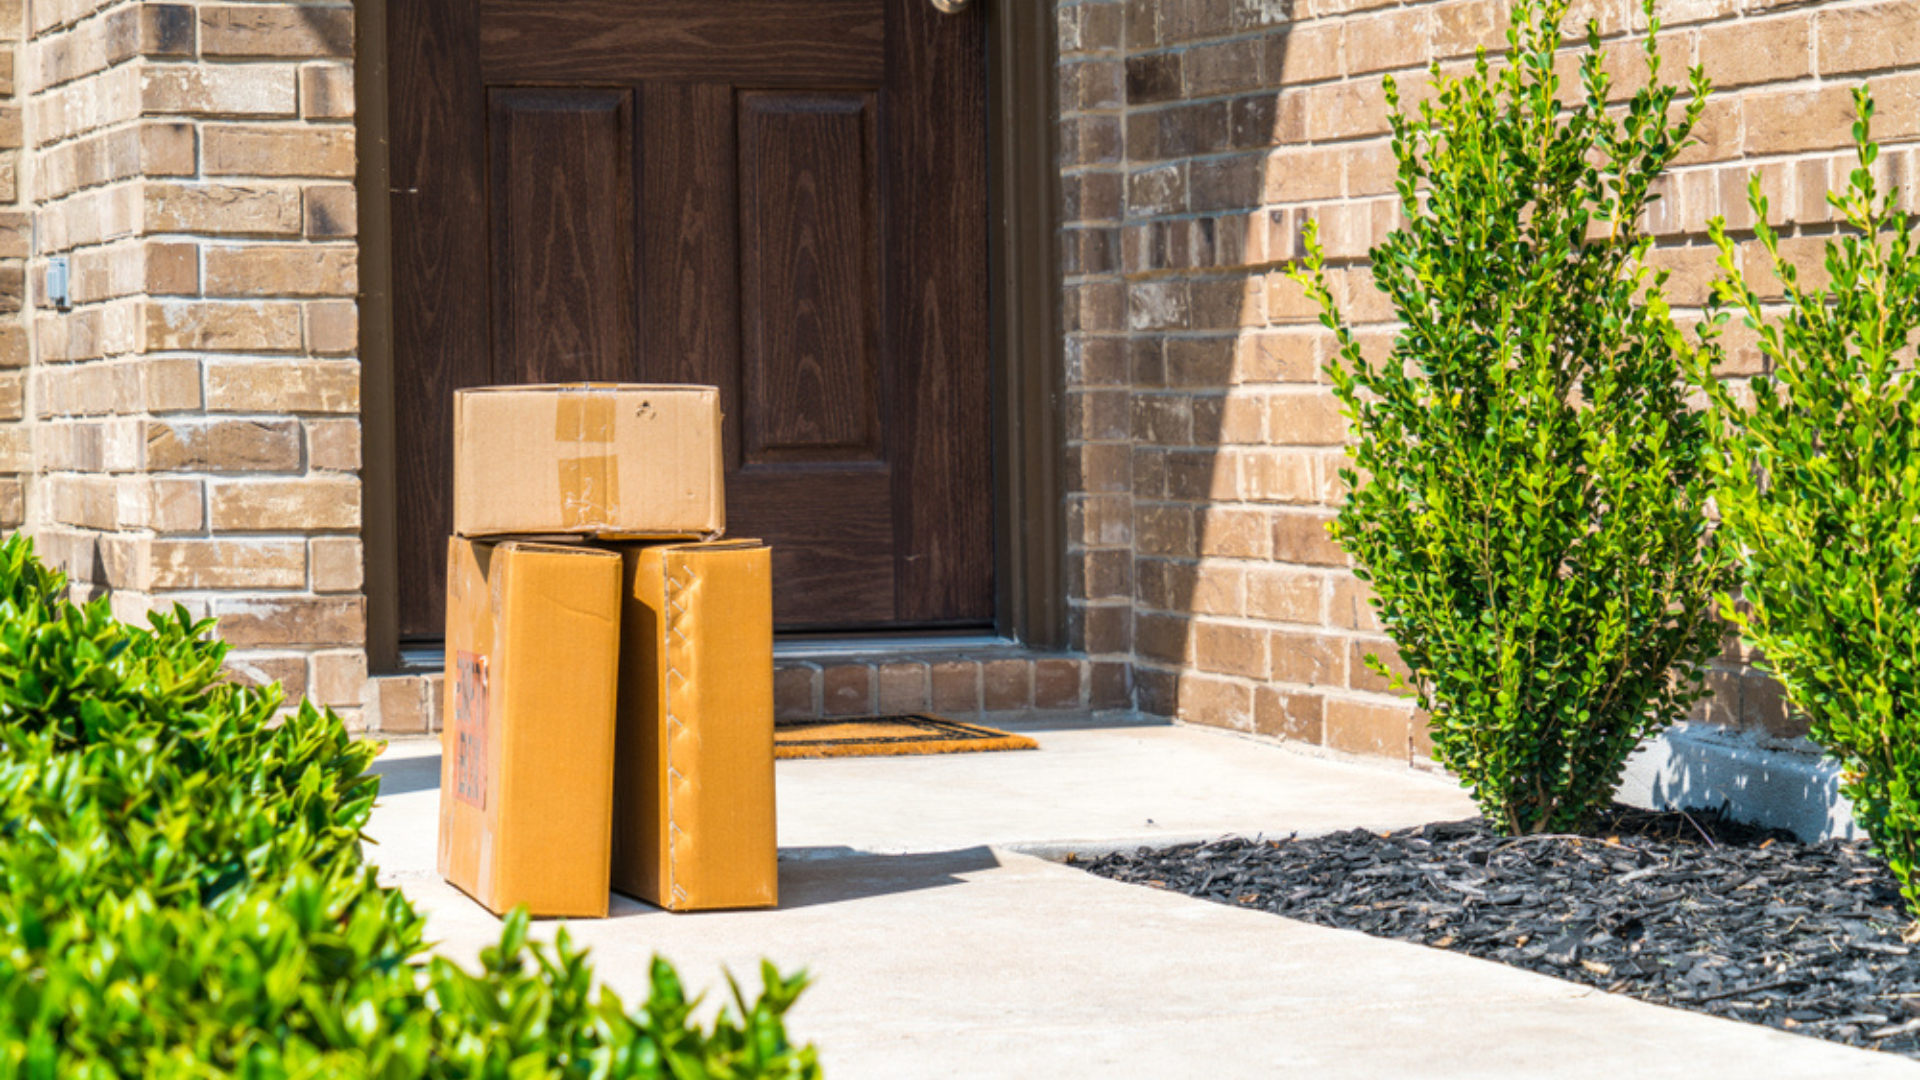 packages at front door